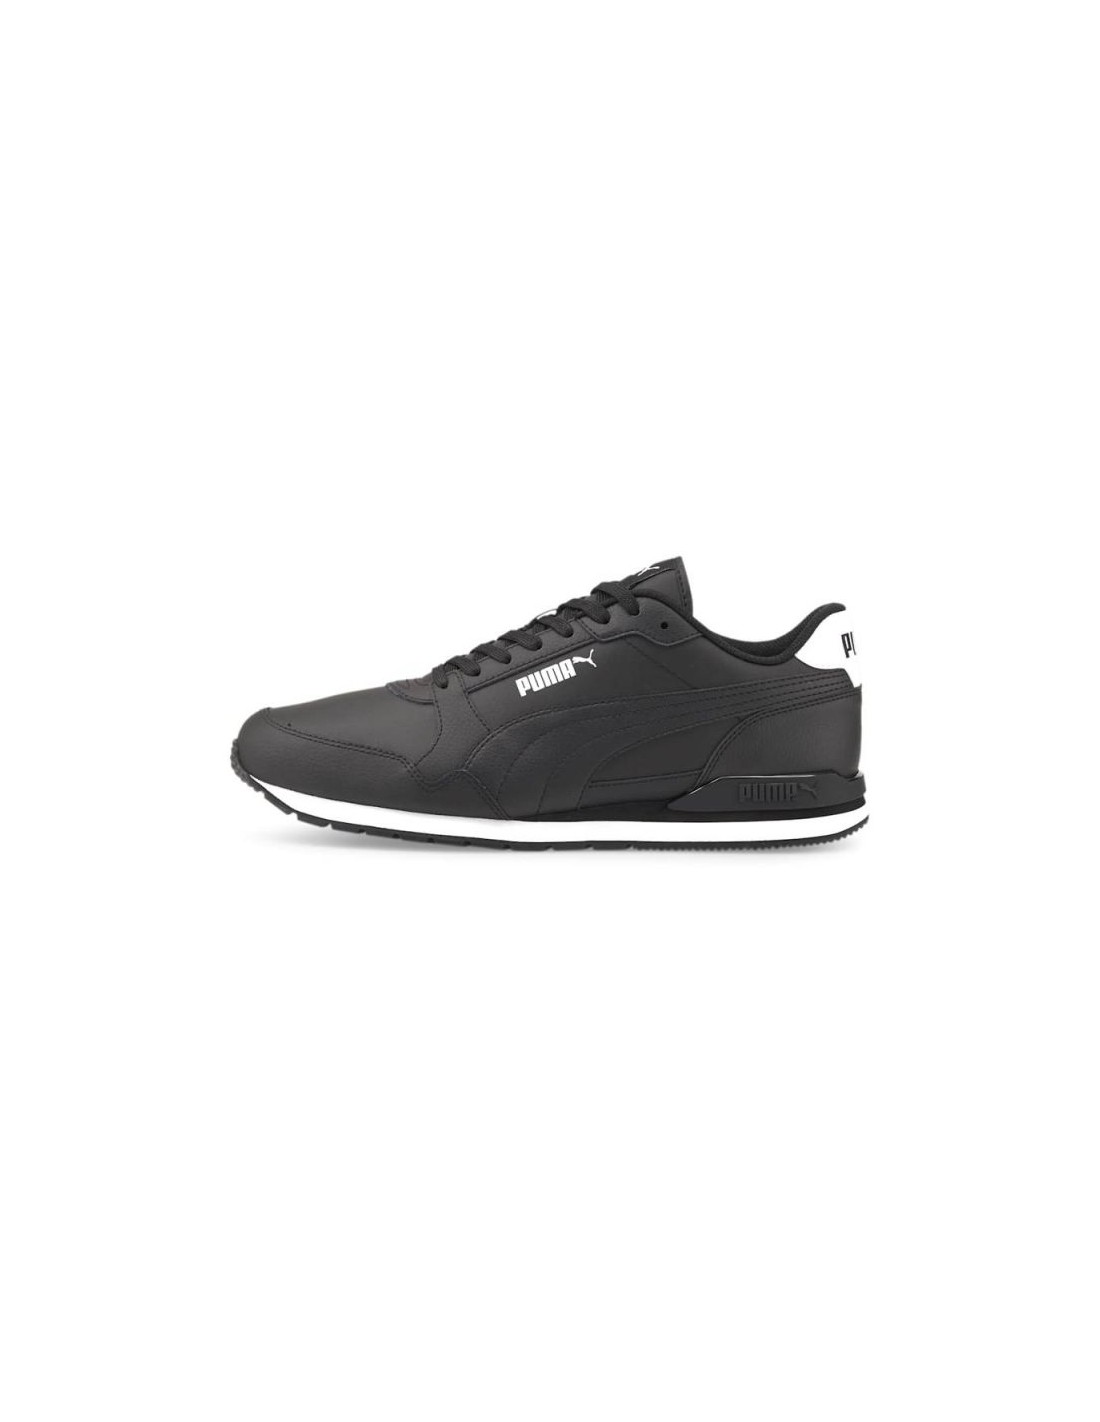 Puma ST Runner V3 LM 384855 02 shoes